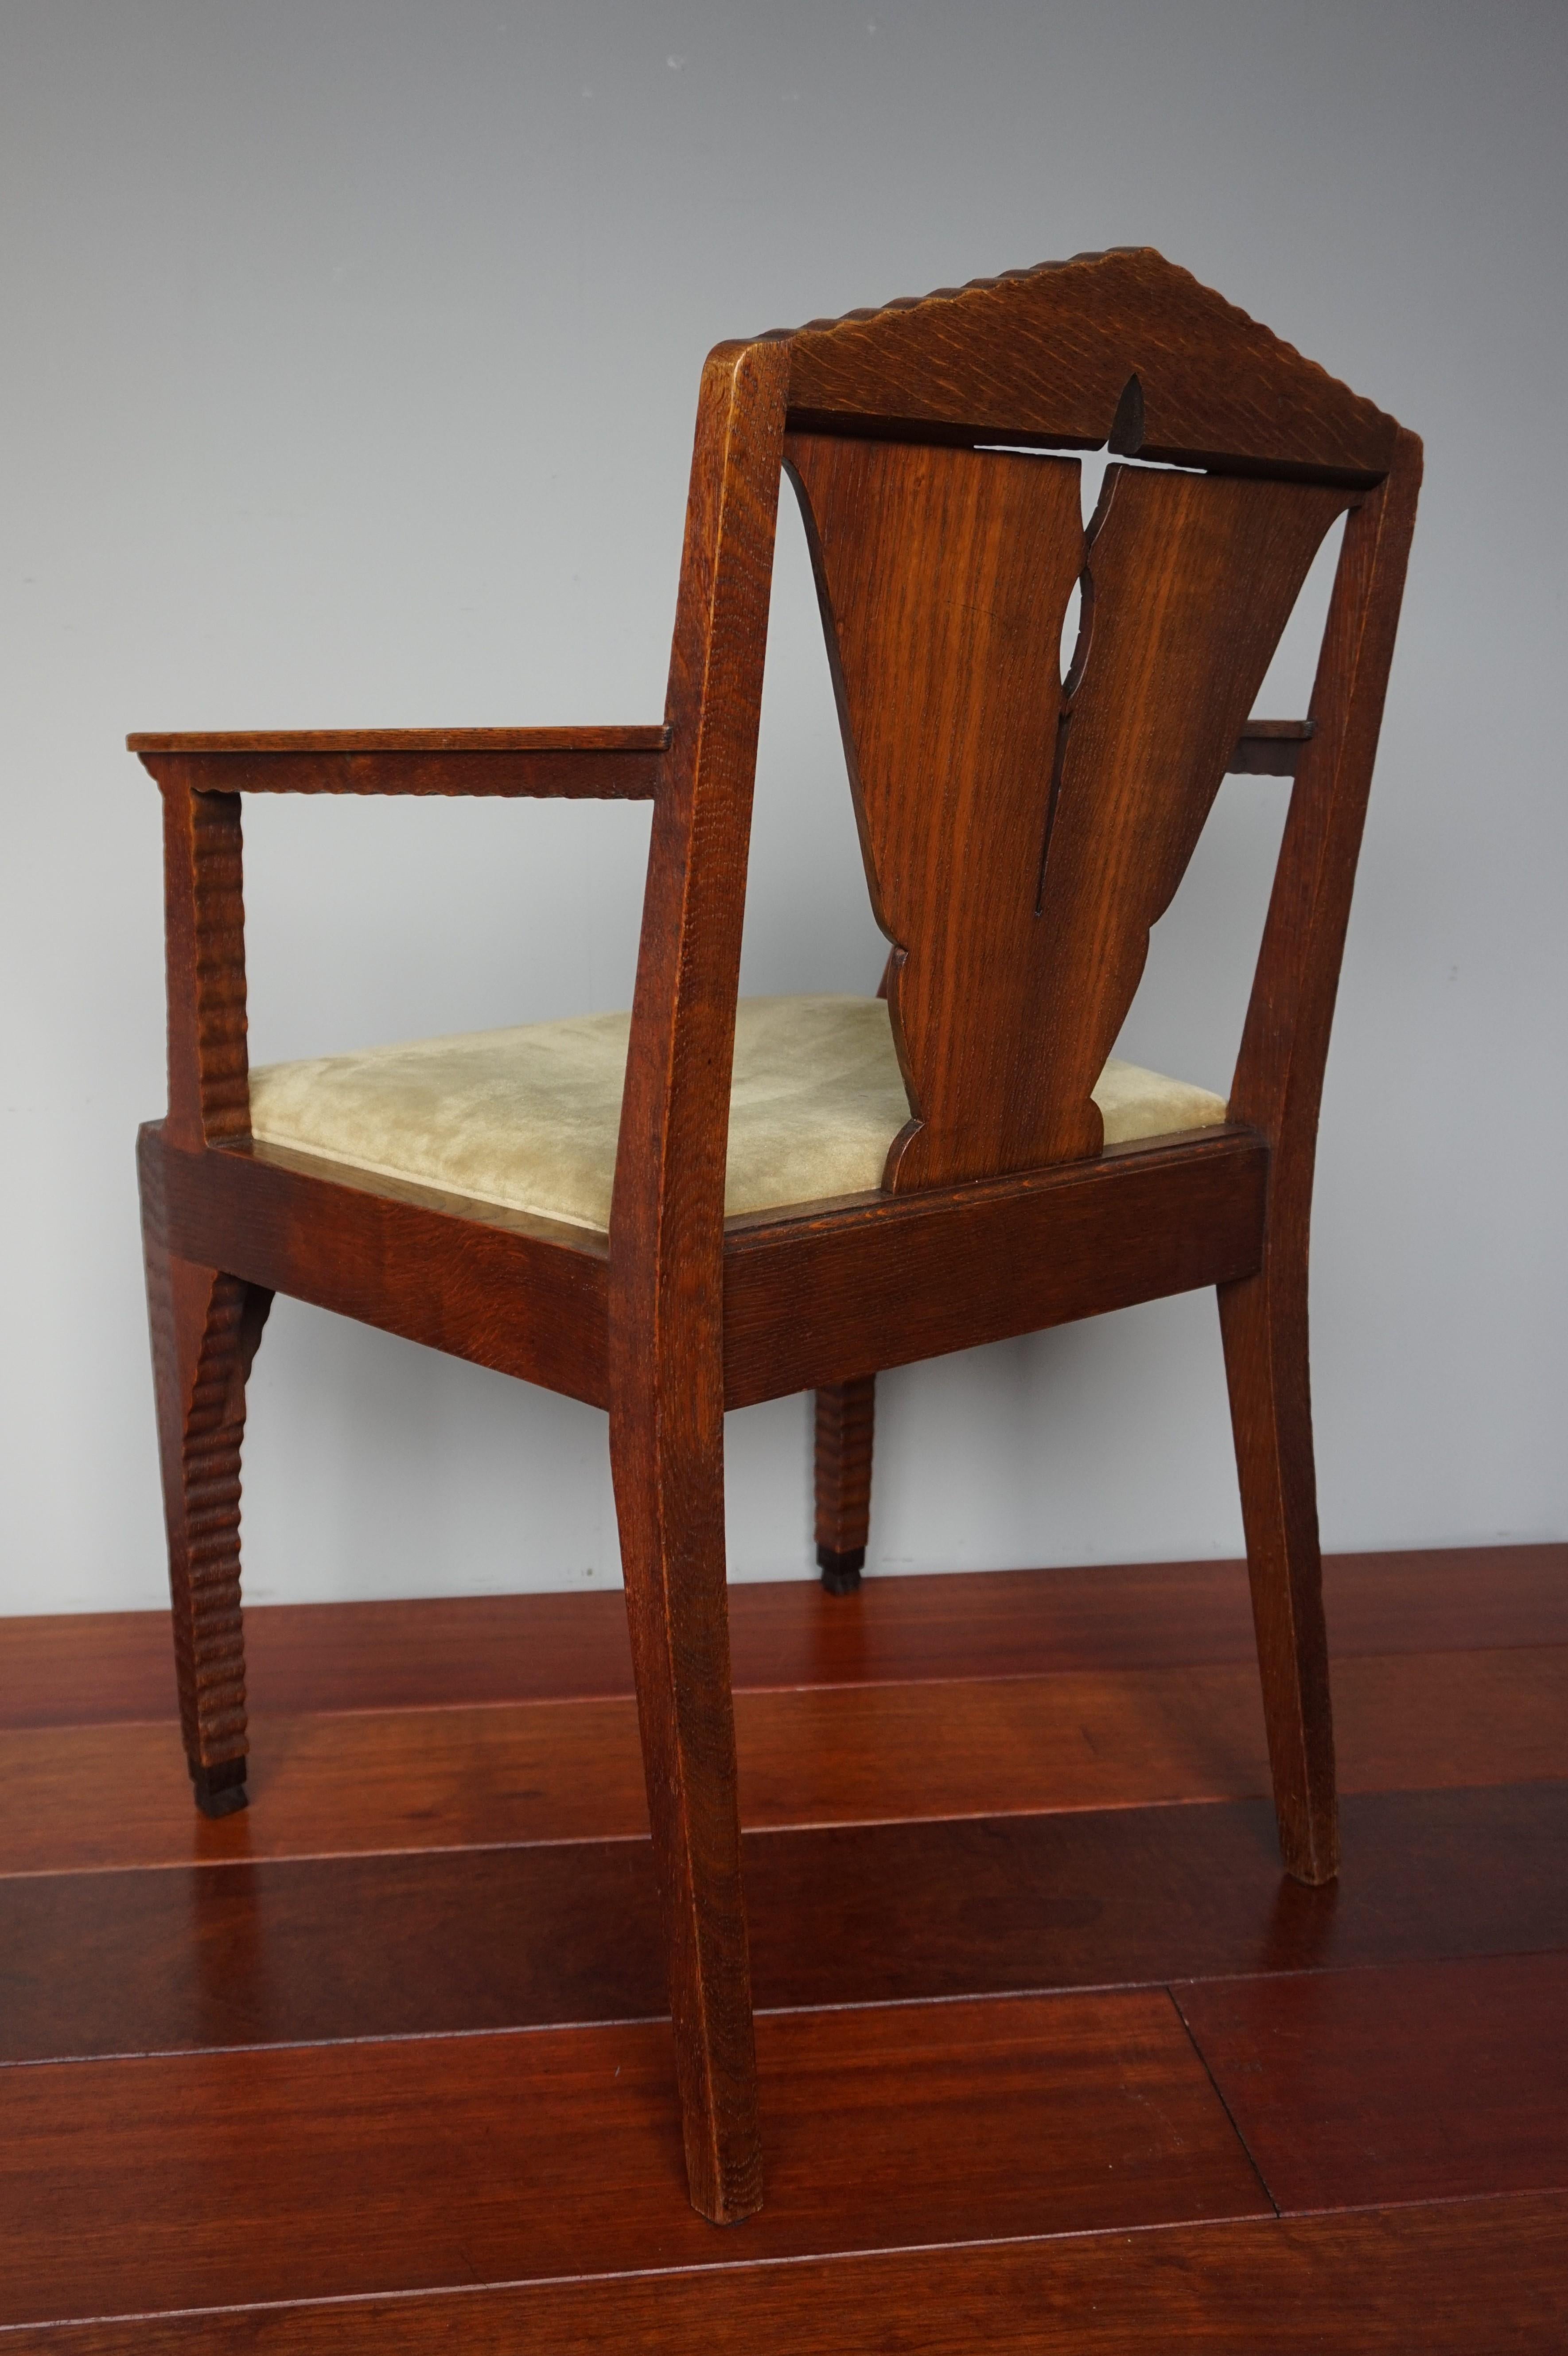 Brilliant Design Dutch Arts & Crafts Oak Desk Chair w. Original Upholstery 1910s For Sale 2